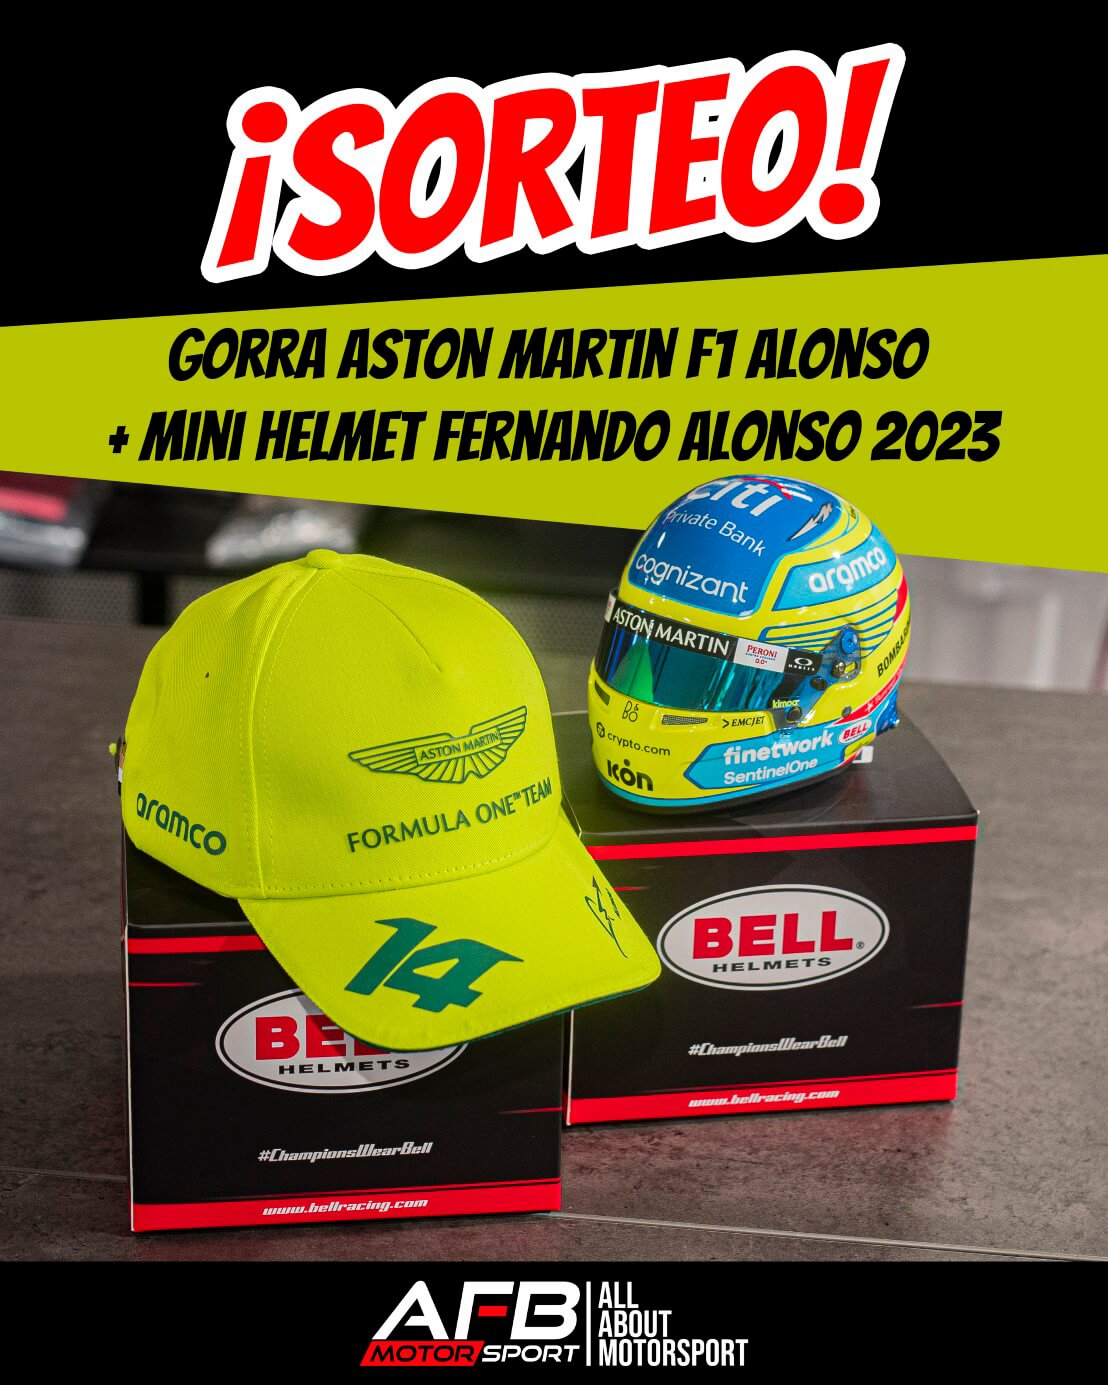 Sorteo Gorra y Mini Helmet Fernando Alonso 2023